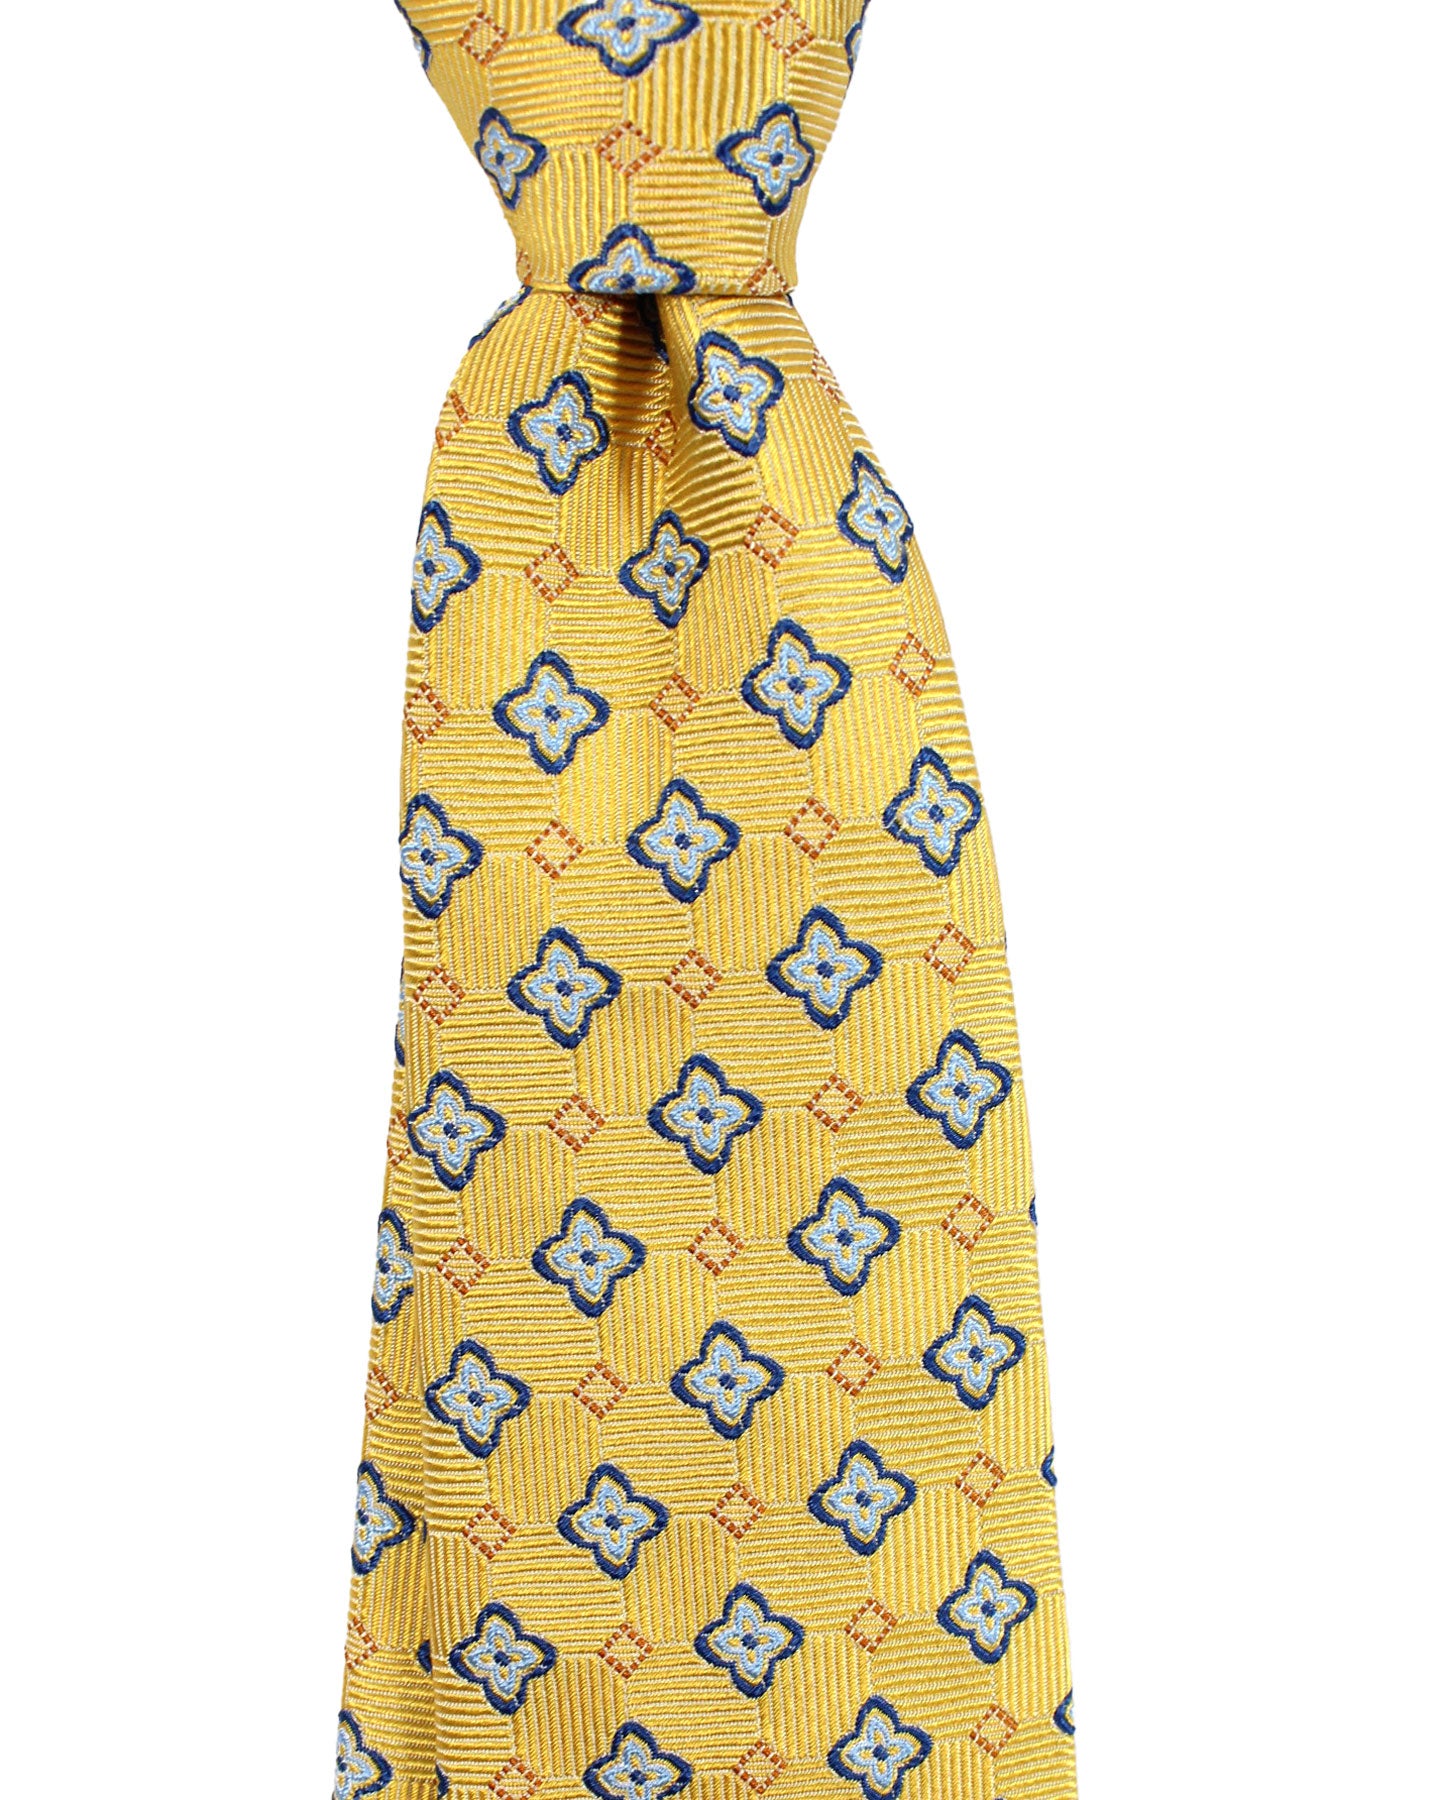 Sartorio Napoli Silk Tie Yellow Blue Geometric Design